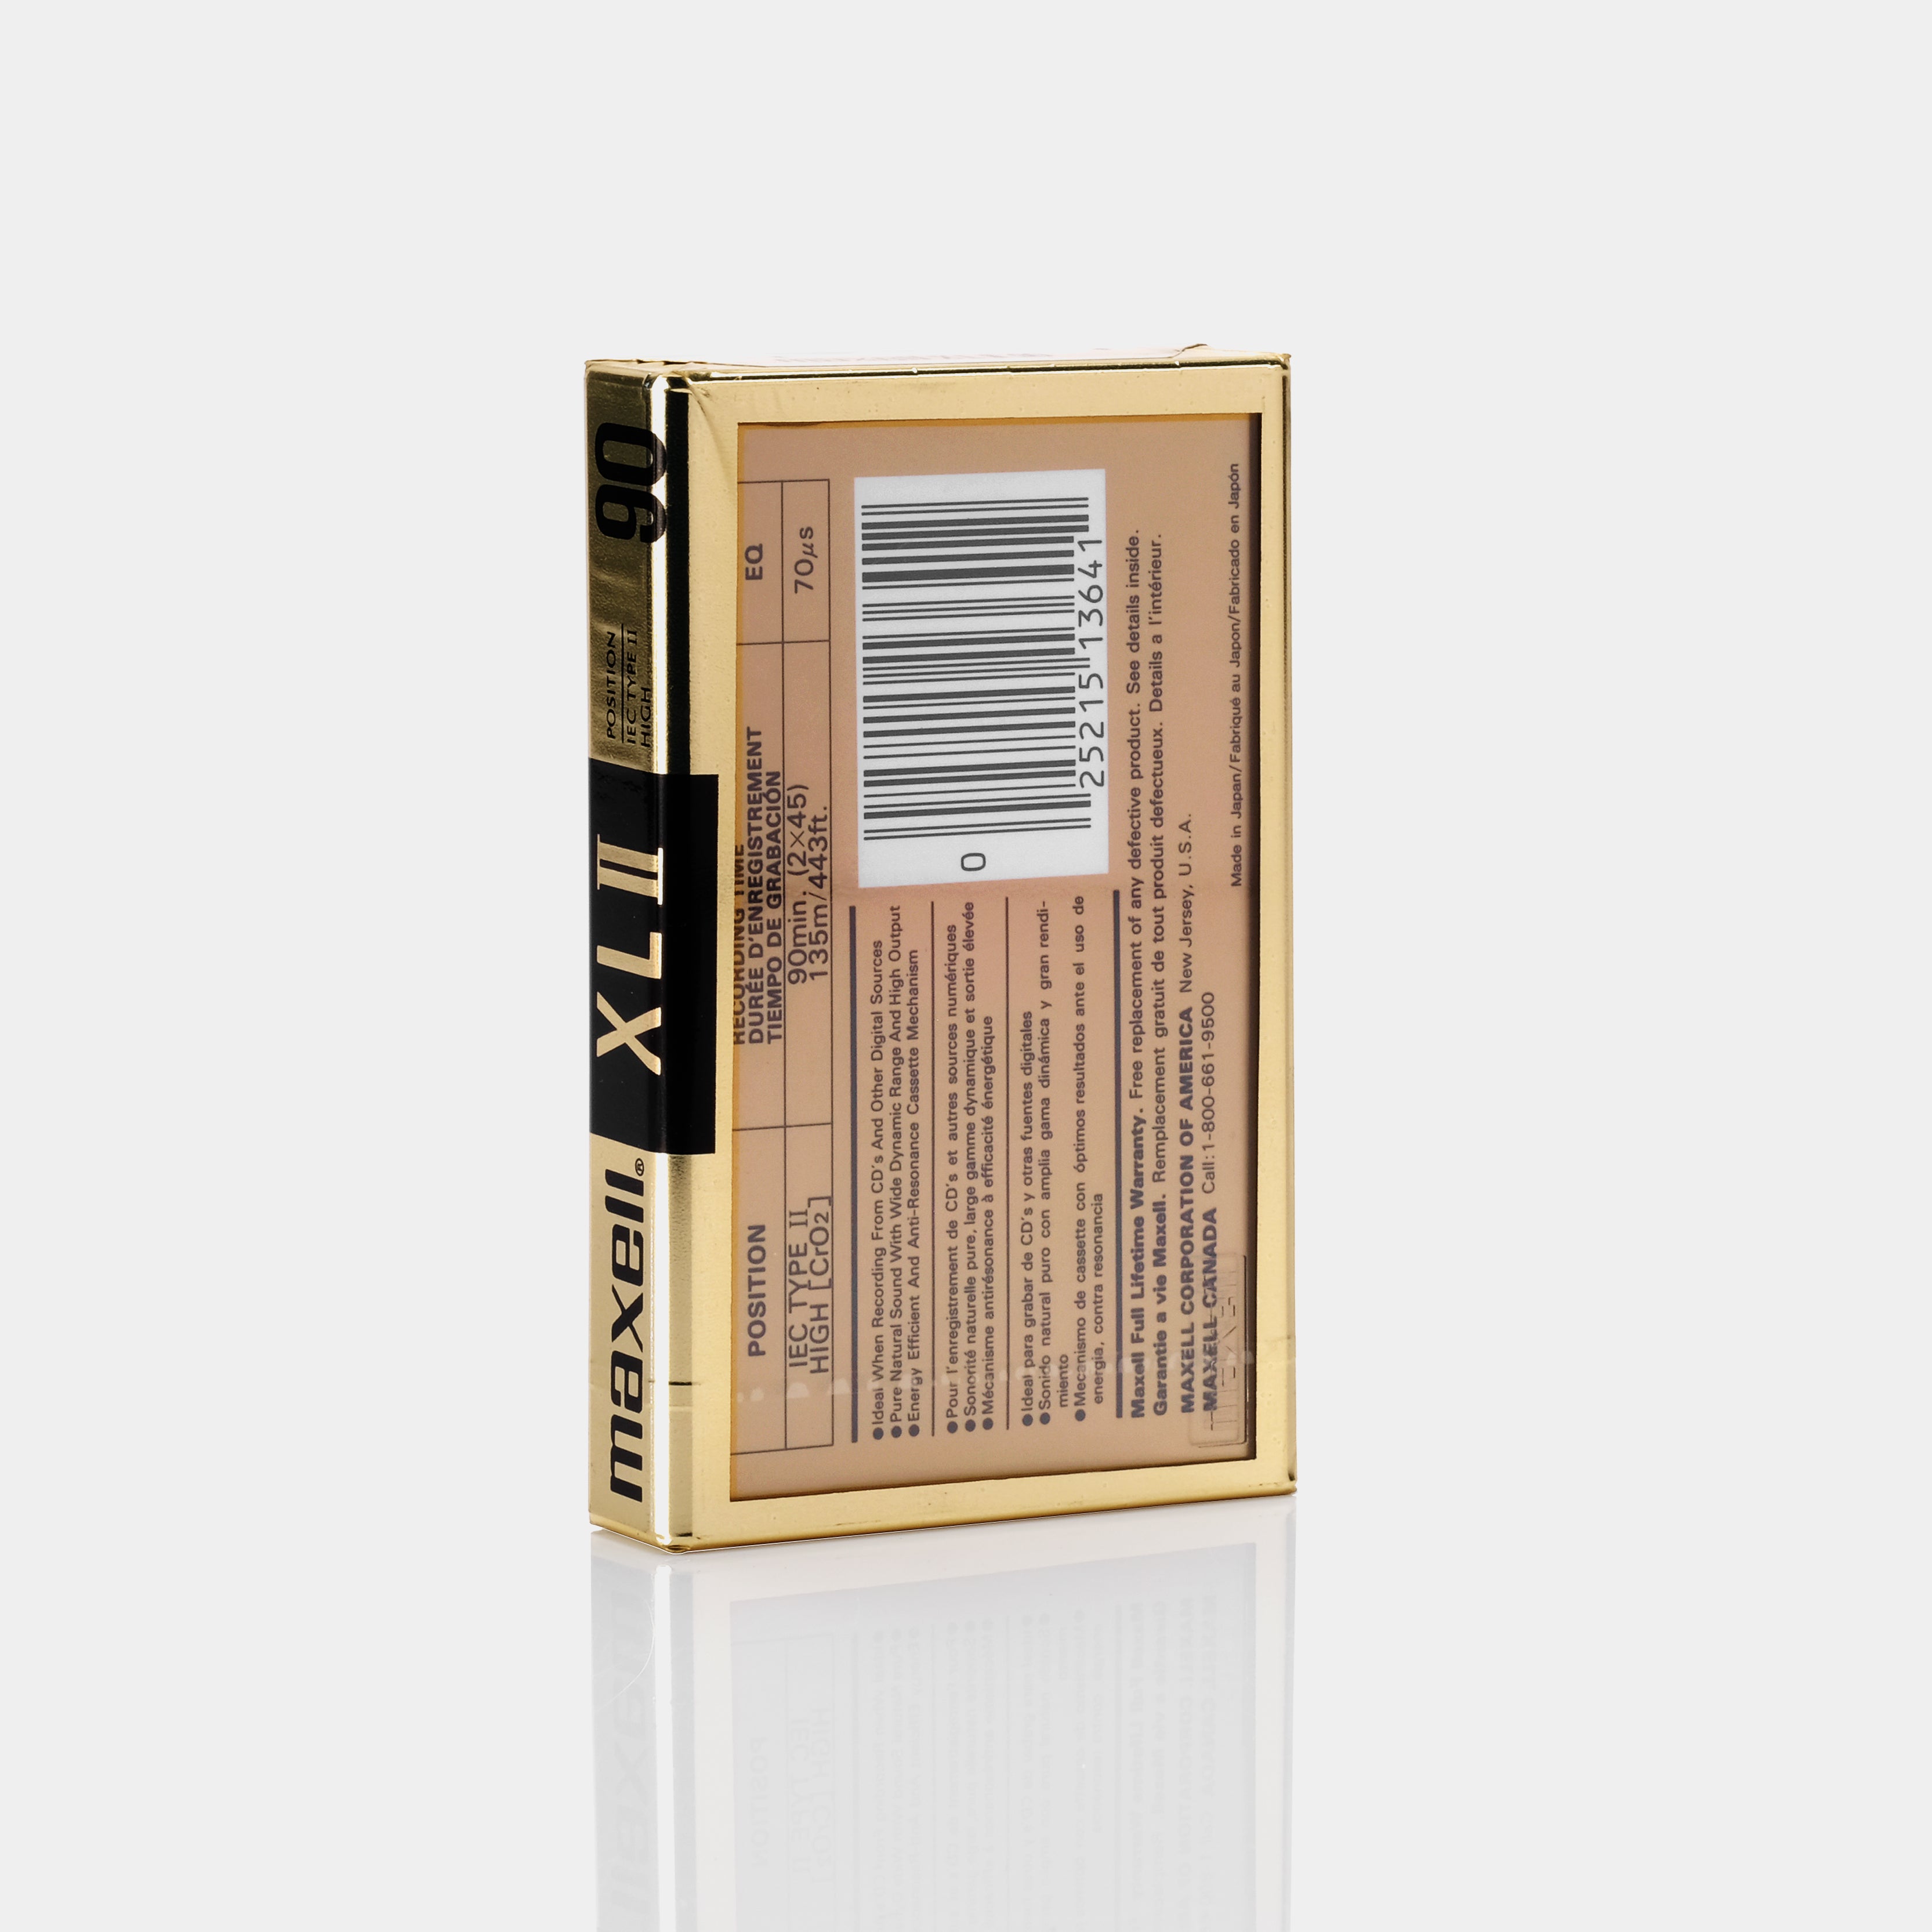 Maxell XLII 90 Type 2 Pure Epitaxial Blank Cassettes High Bias Cro2 NOS -   Canada